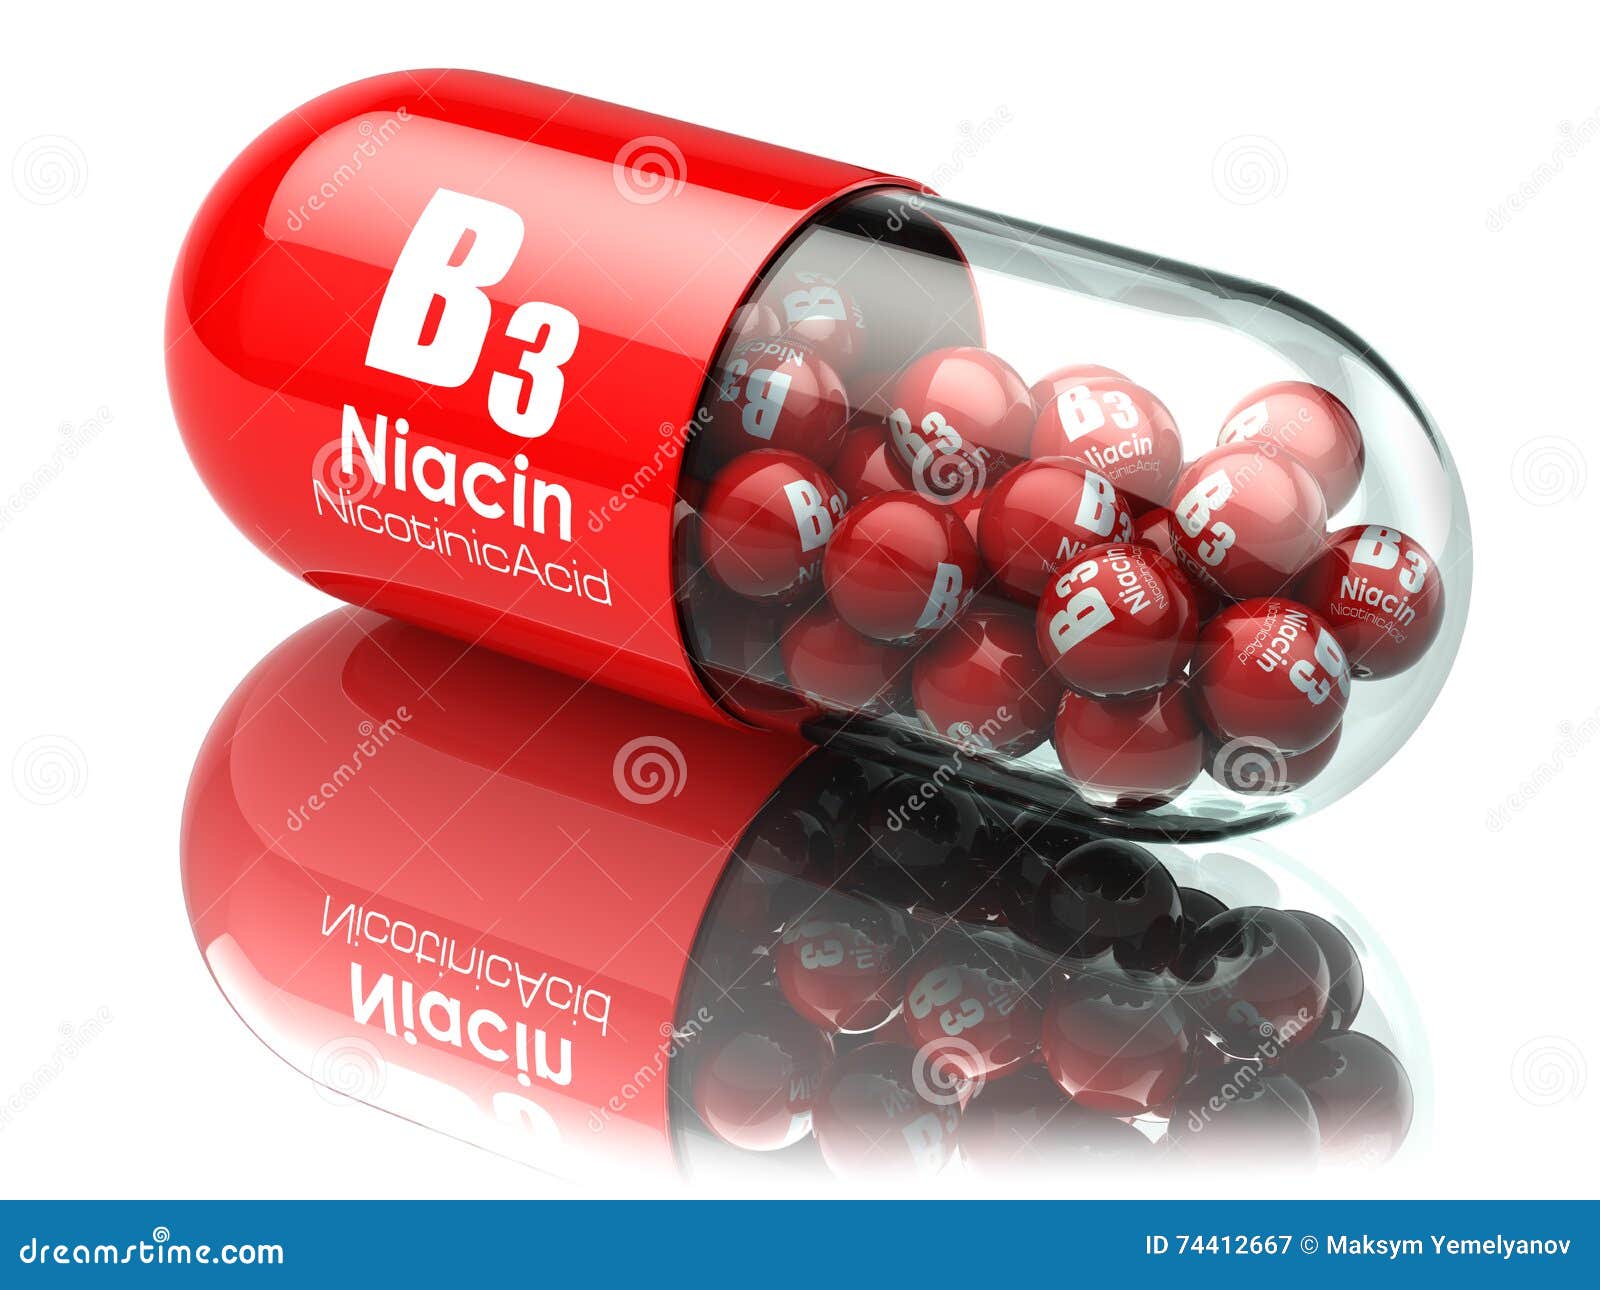 vitamin b3 capsule. pill with niacin or nicotinic acid. dietary